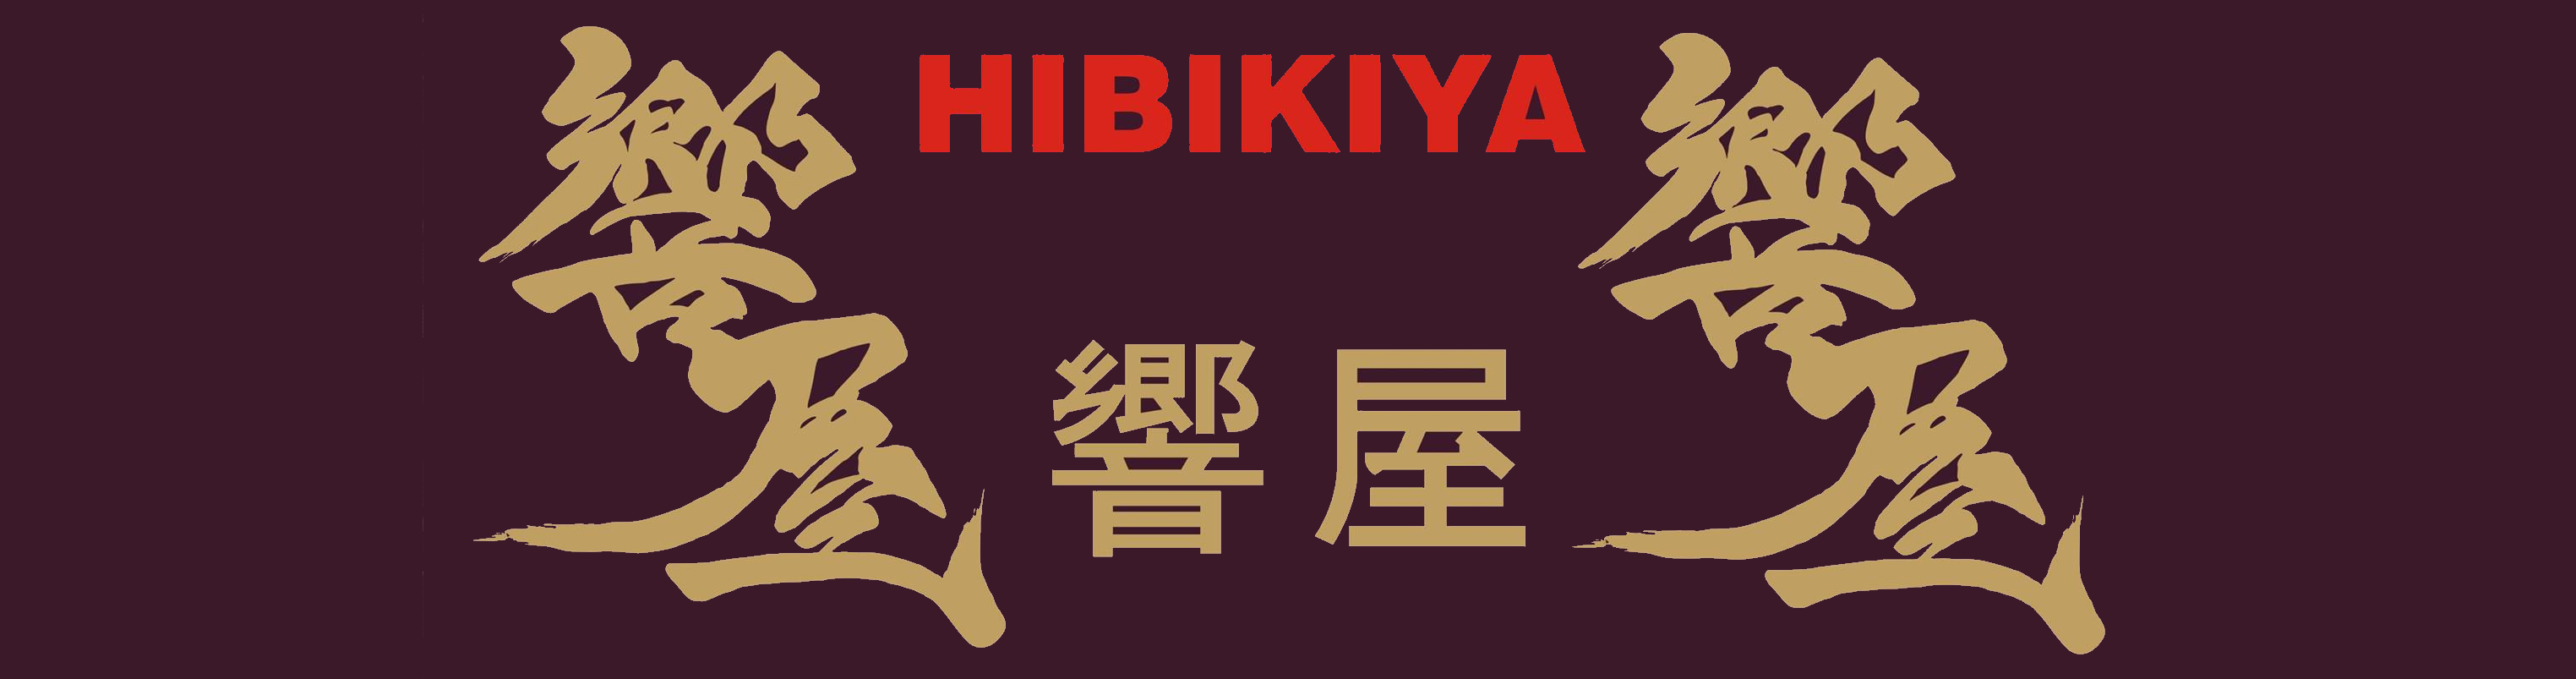 Japanese Taiko Drum Group - Hibikiya